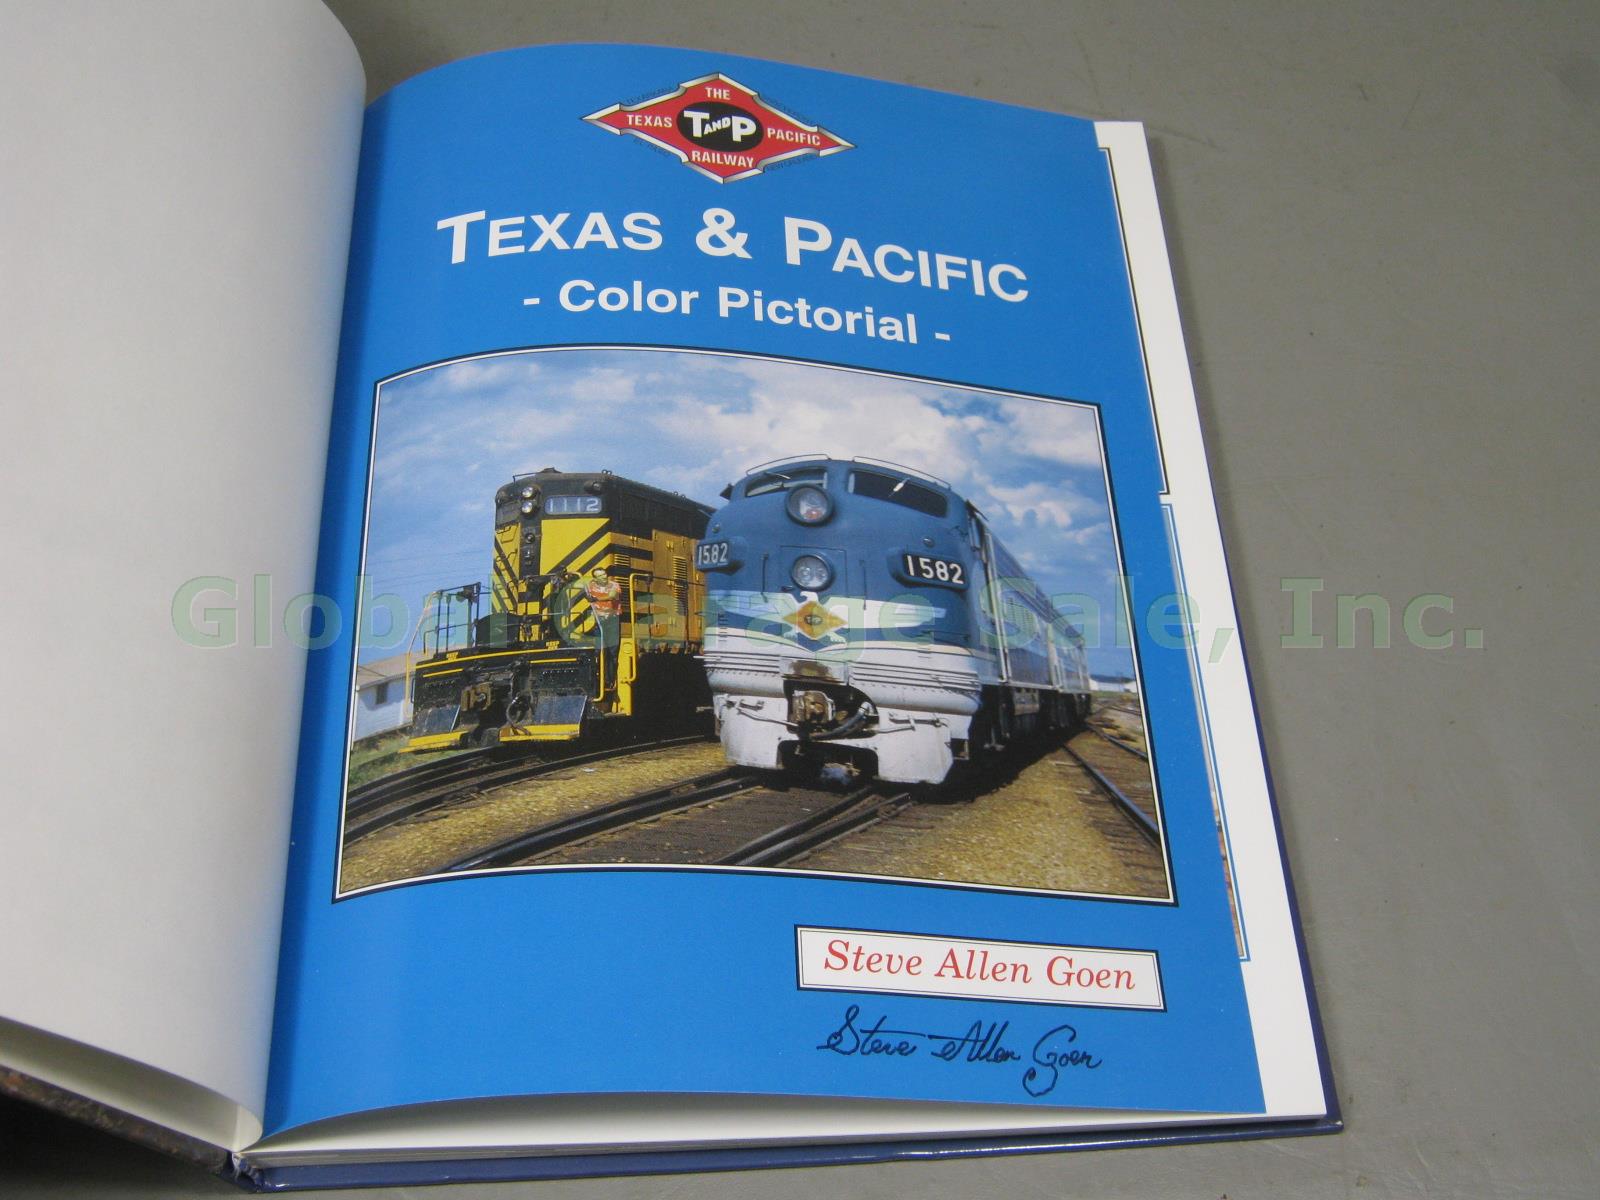 SIGNED Texas & Pacific Color Pictorial Railroad Train Book Steve Allen Goen 1997 2